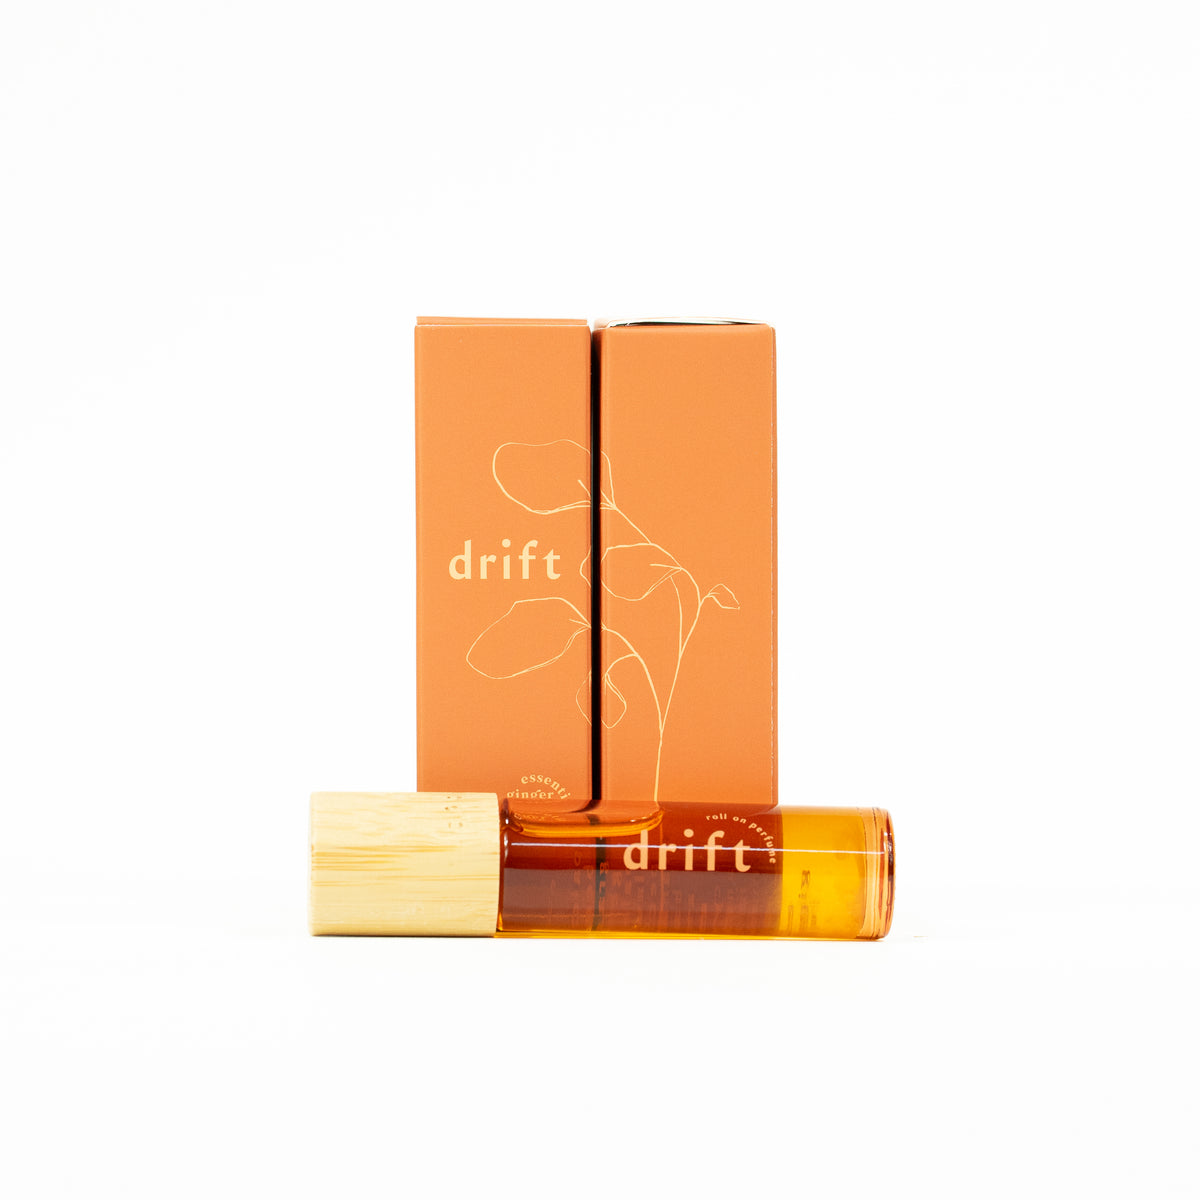 Natsu Dragneel and Igneel Fairy Tail Custom Personalized Gift Car Air  Freshener Fragrance Perfume